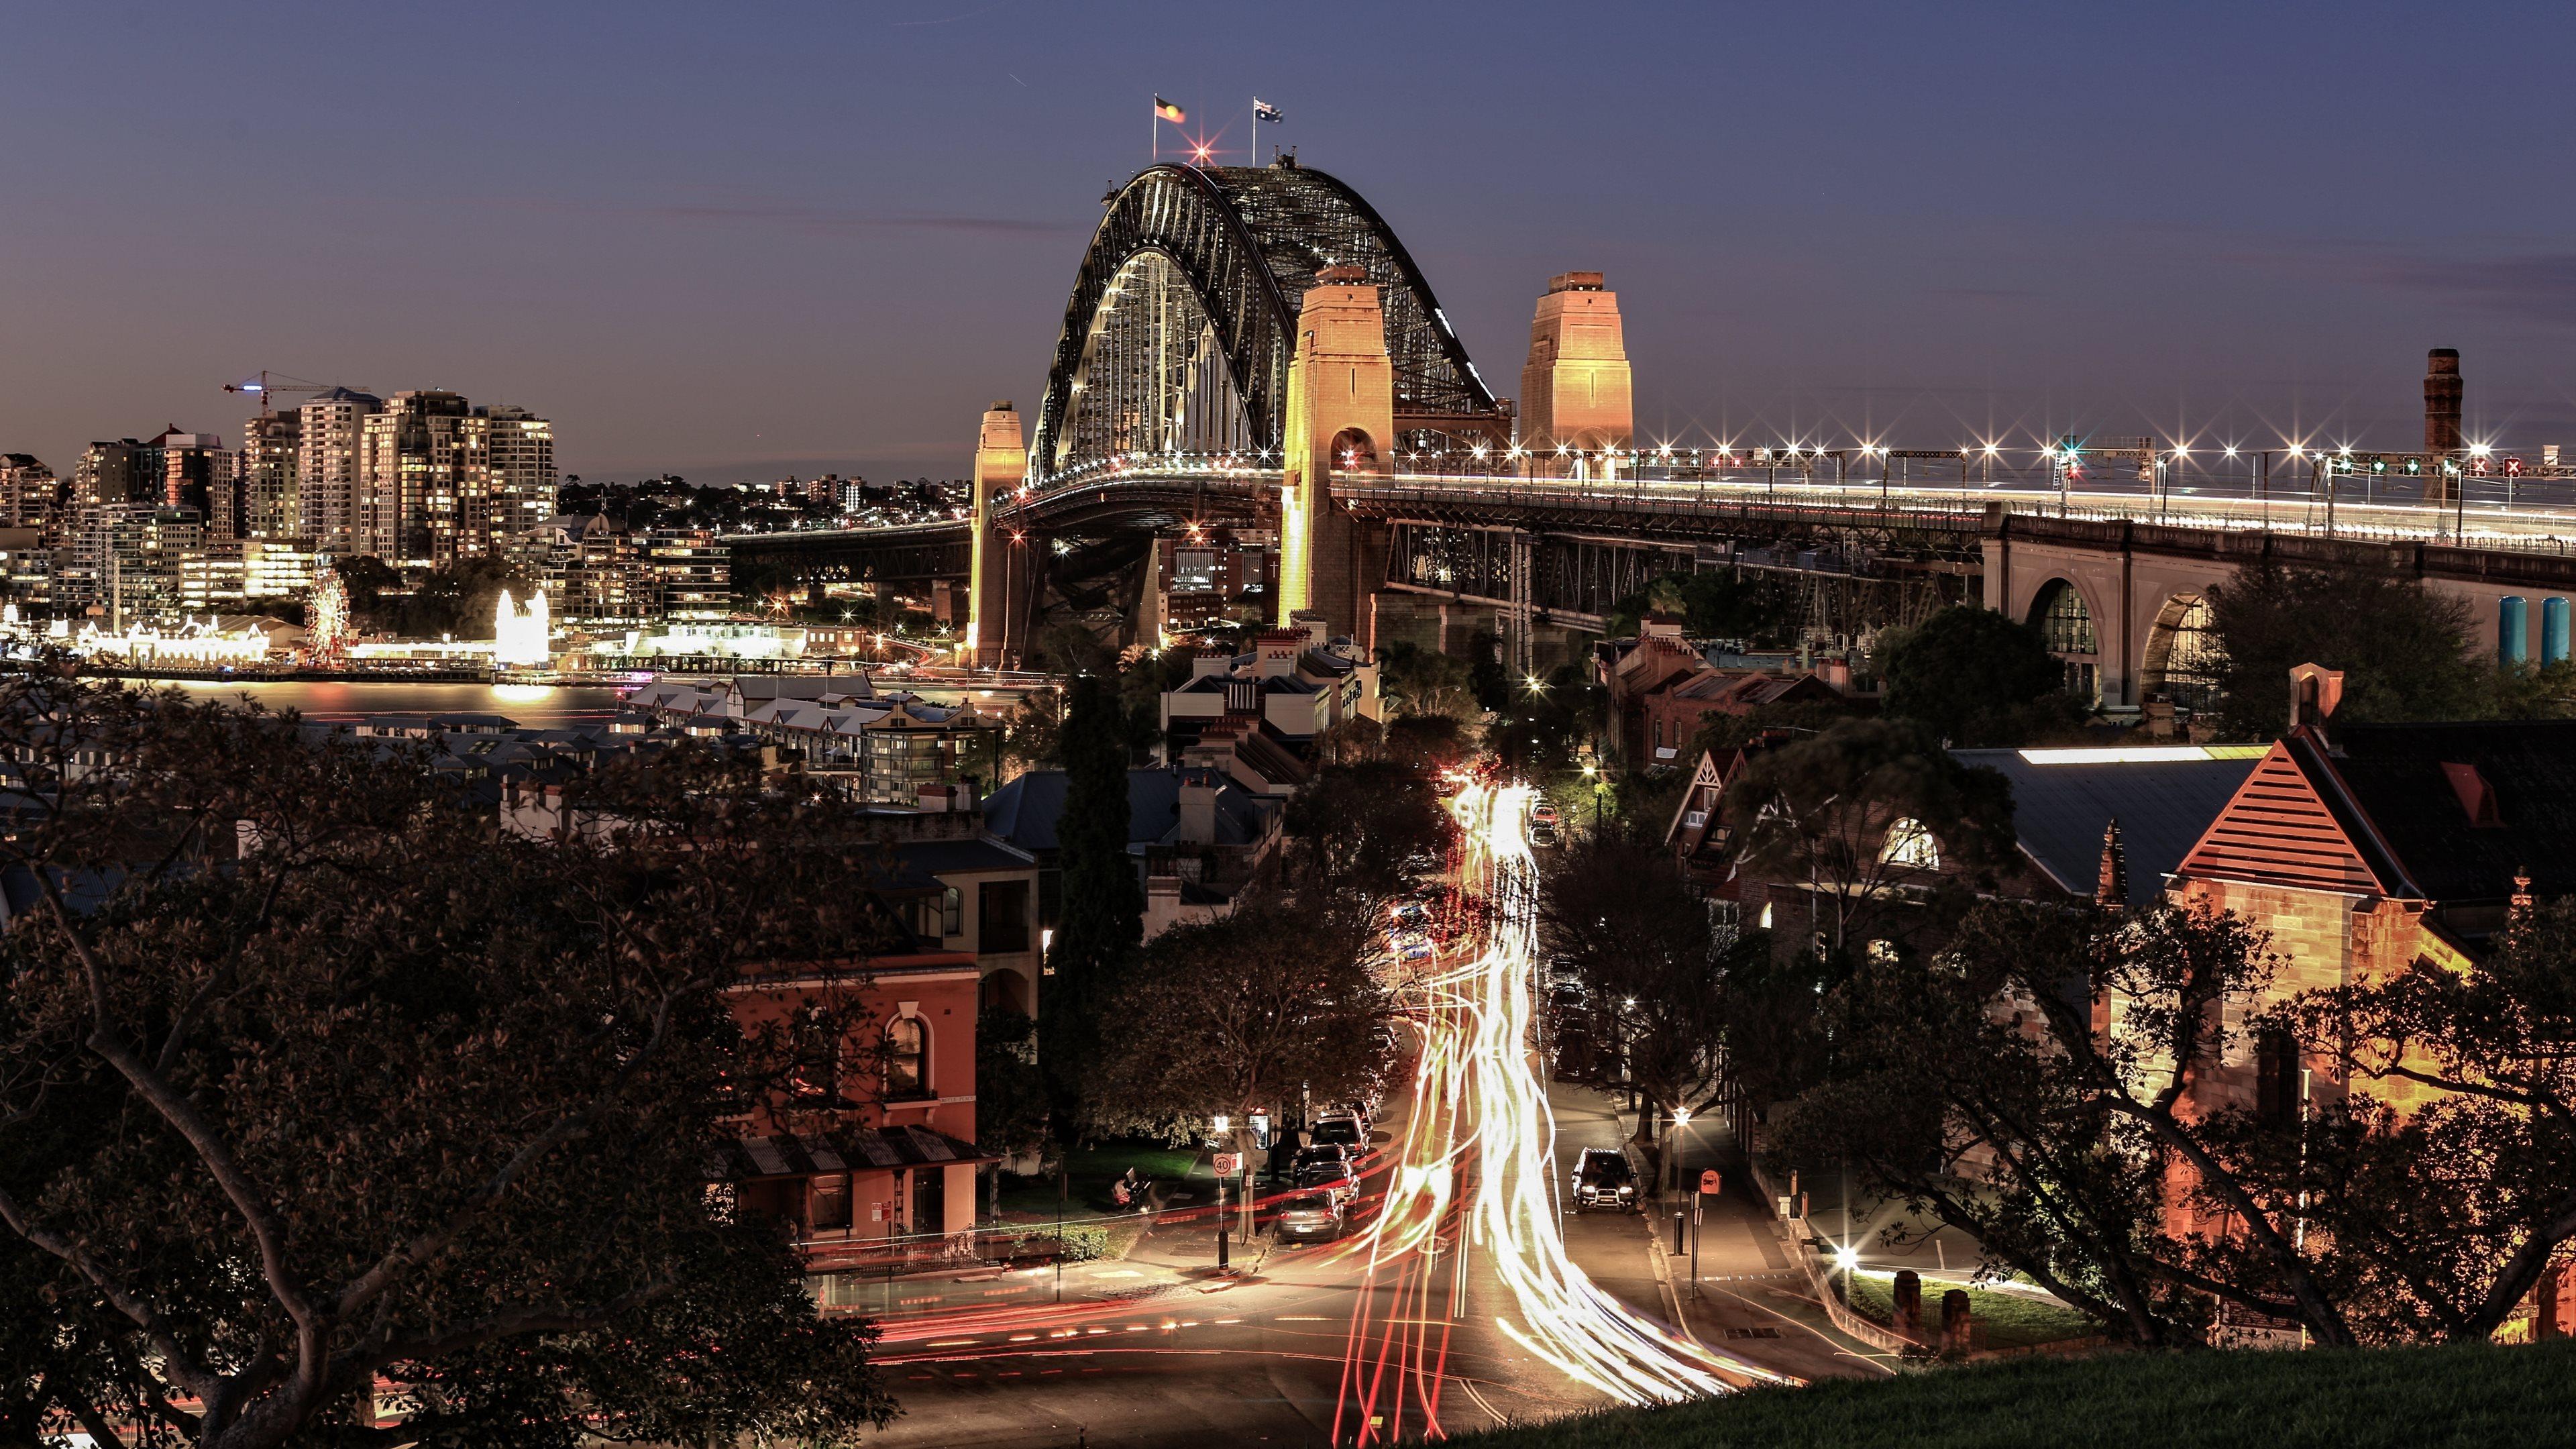 Bridge In Sydney - Sydney Harbour Bridge 4k - 3840x2160 Wallpaper -  